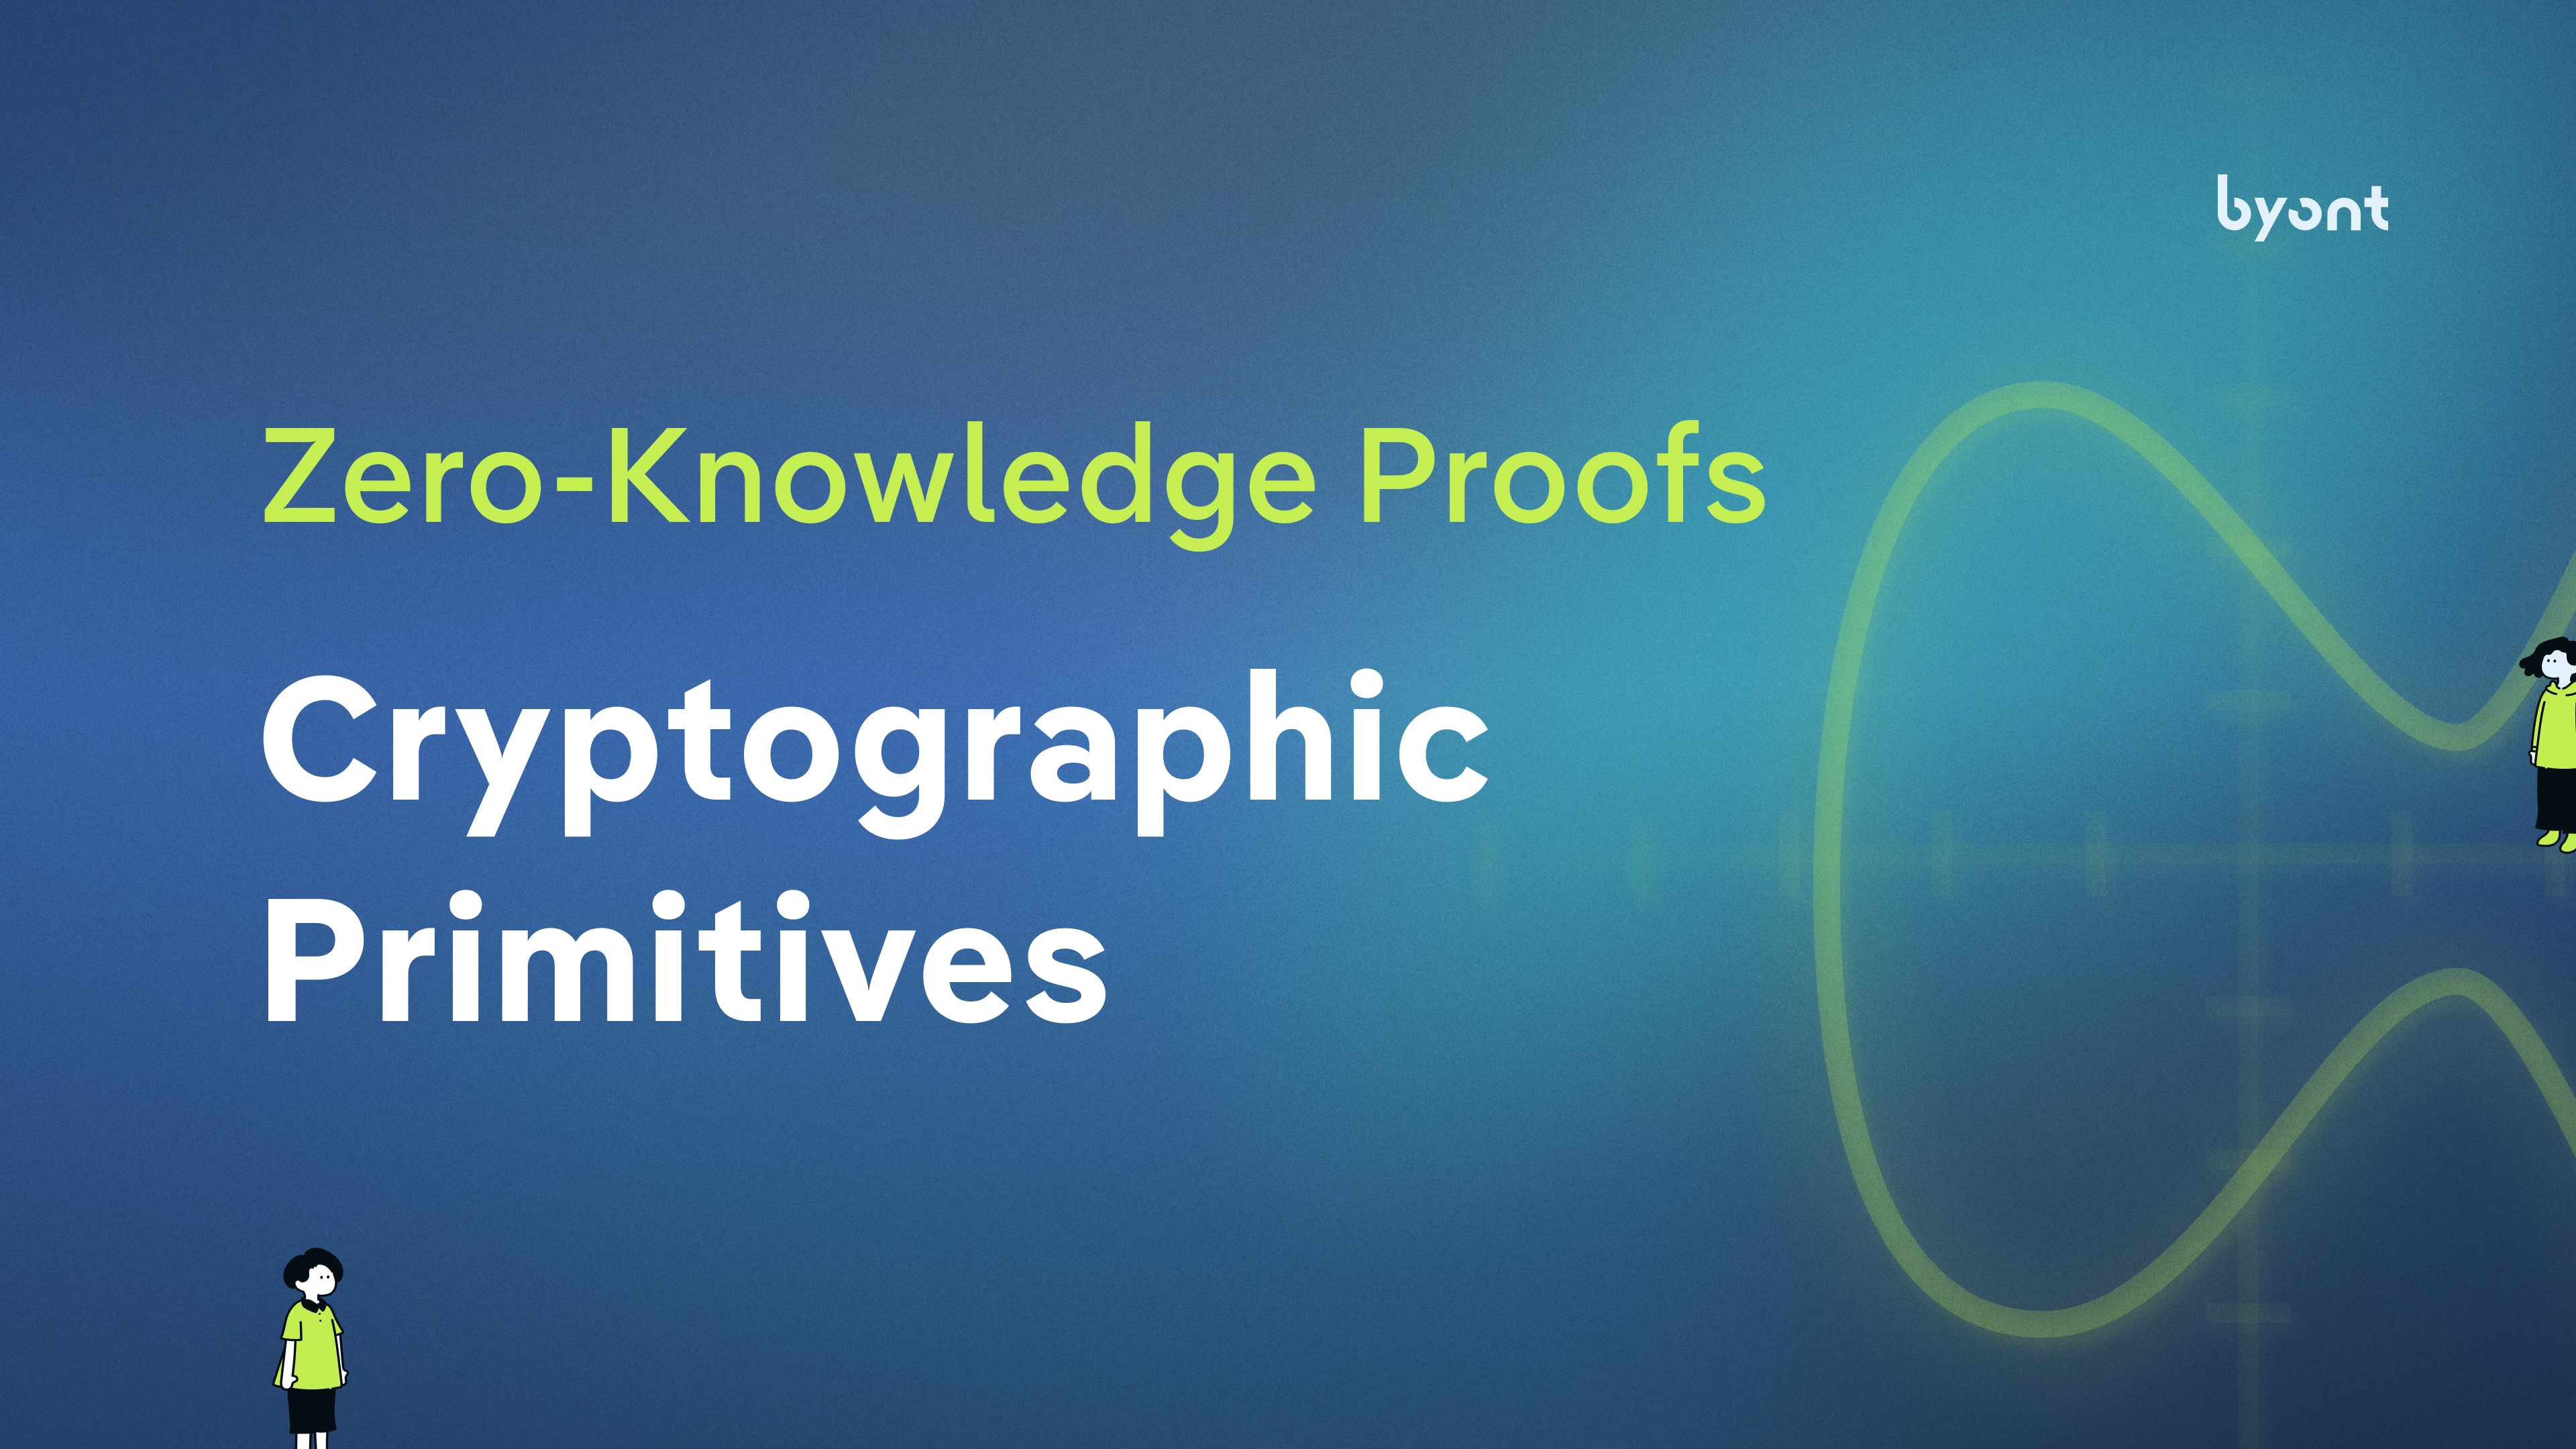 Zero-Knowledge Proof - Cryptographic Primitives and Sigma Protocol